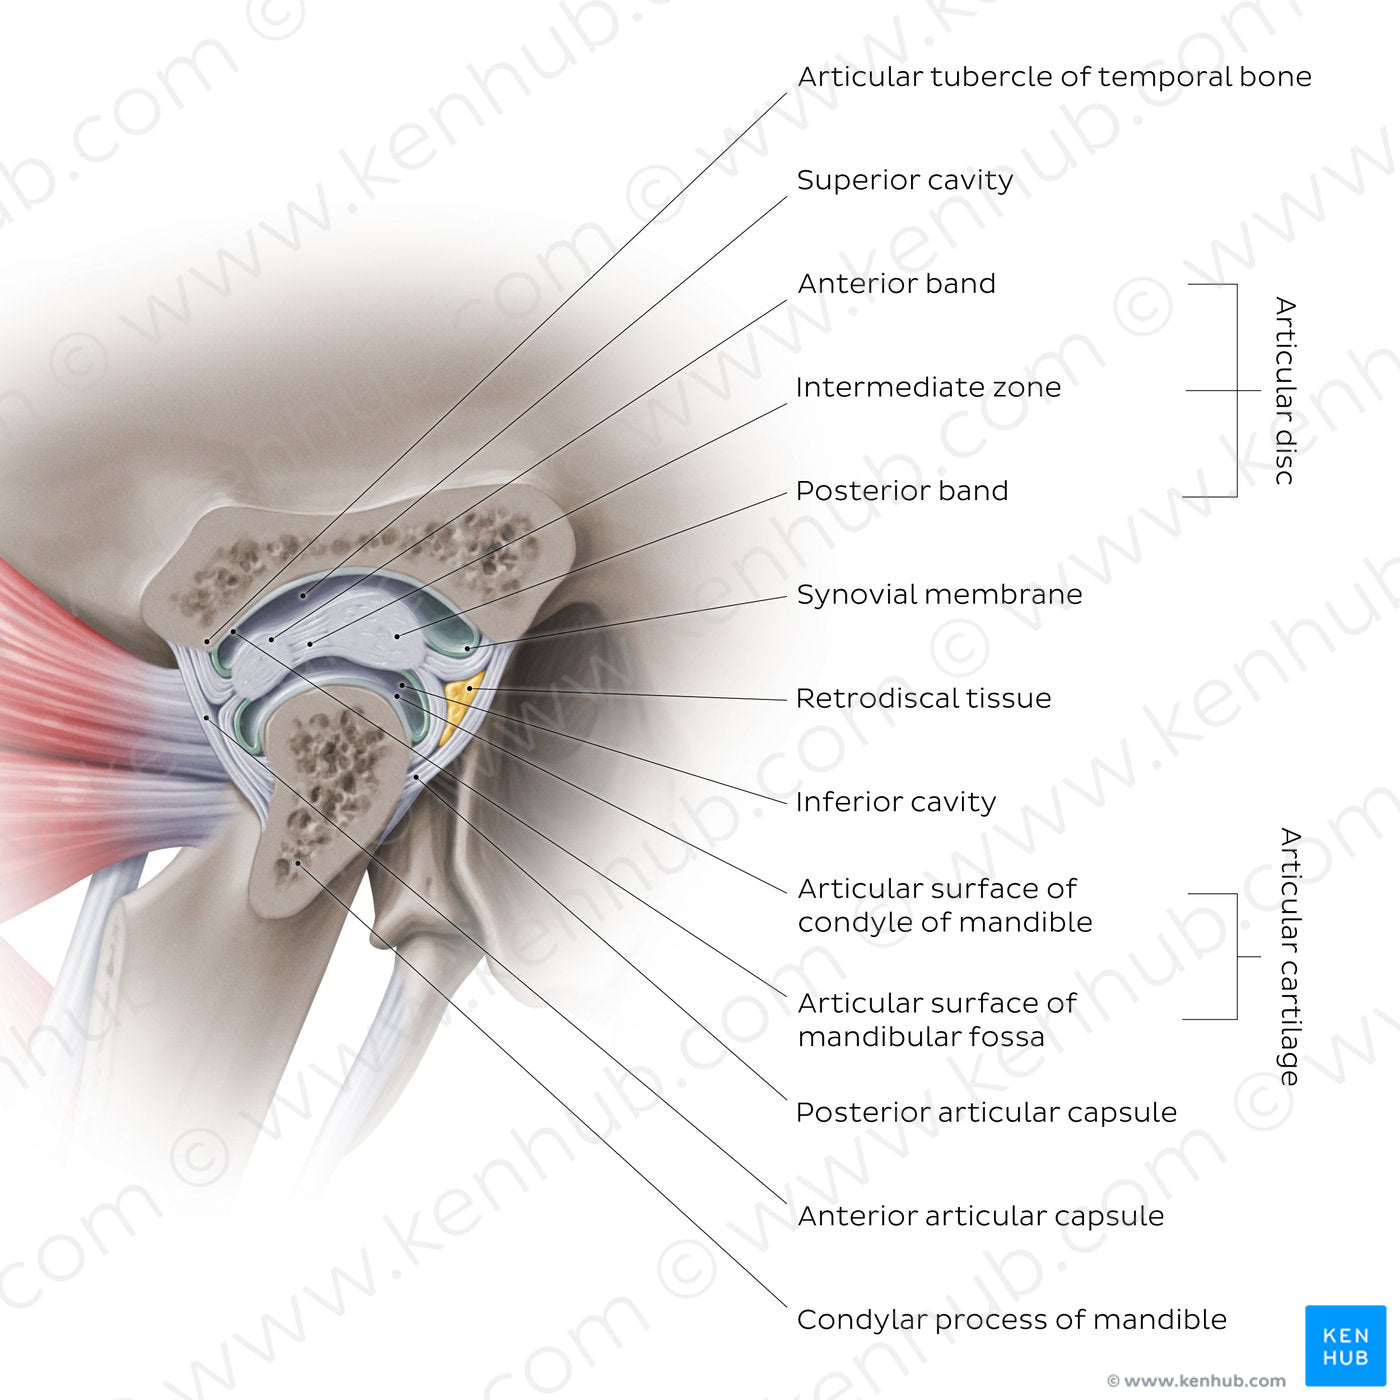 Temporomandibular joint: capsule (English)